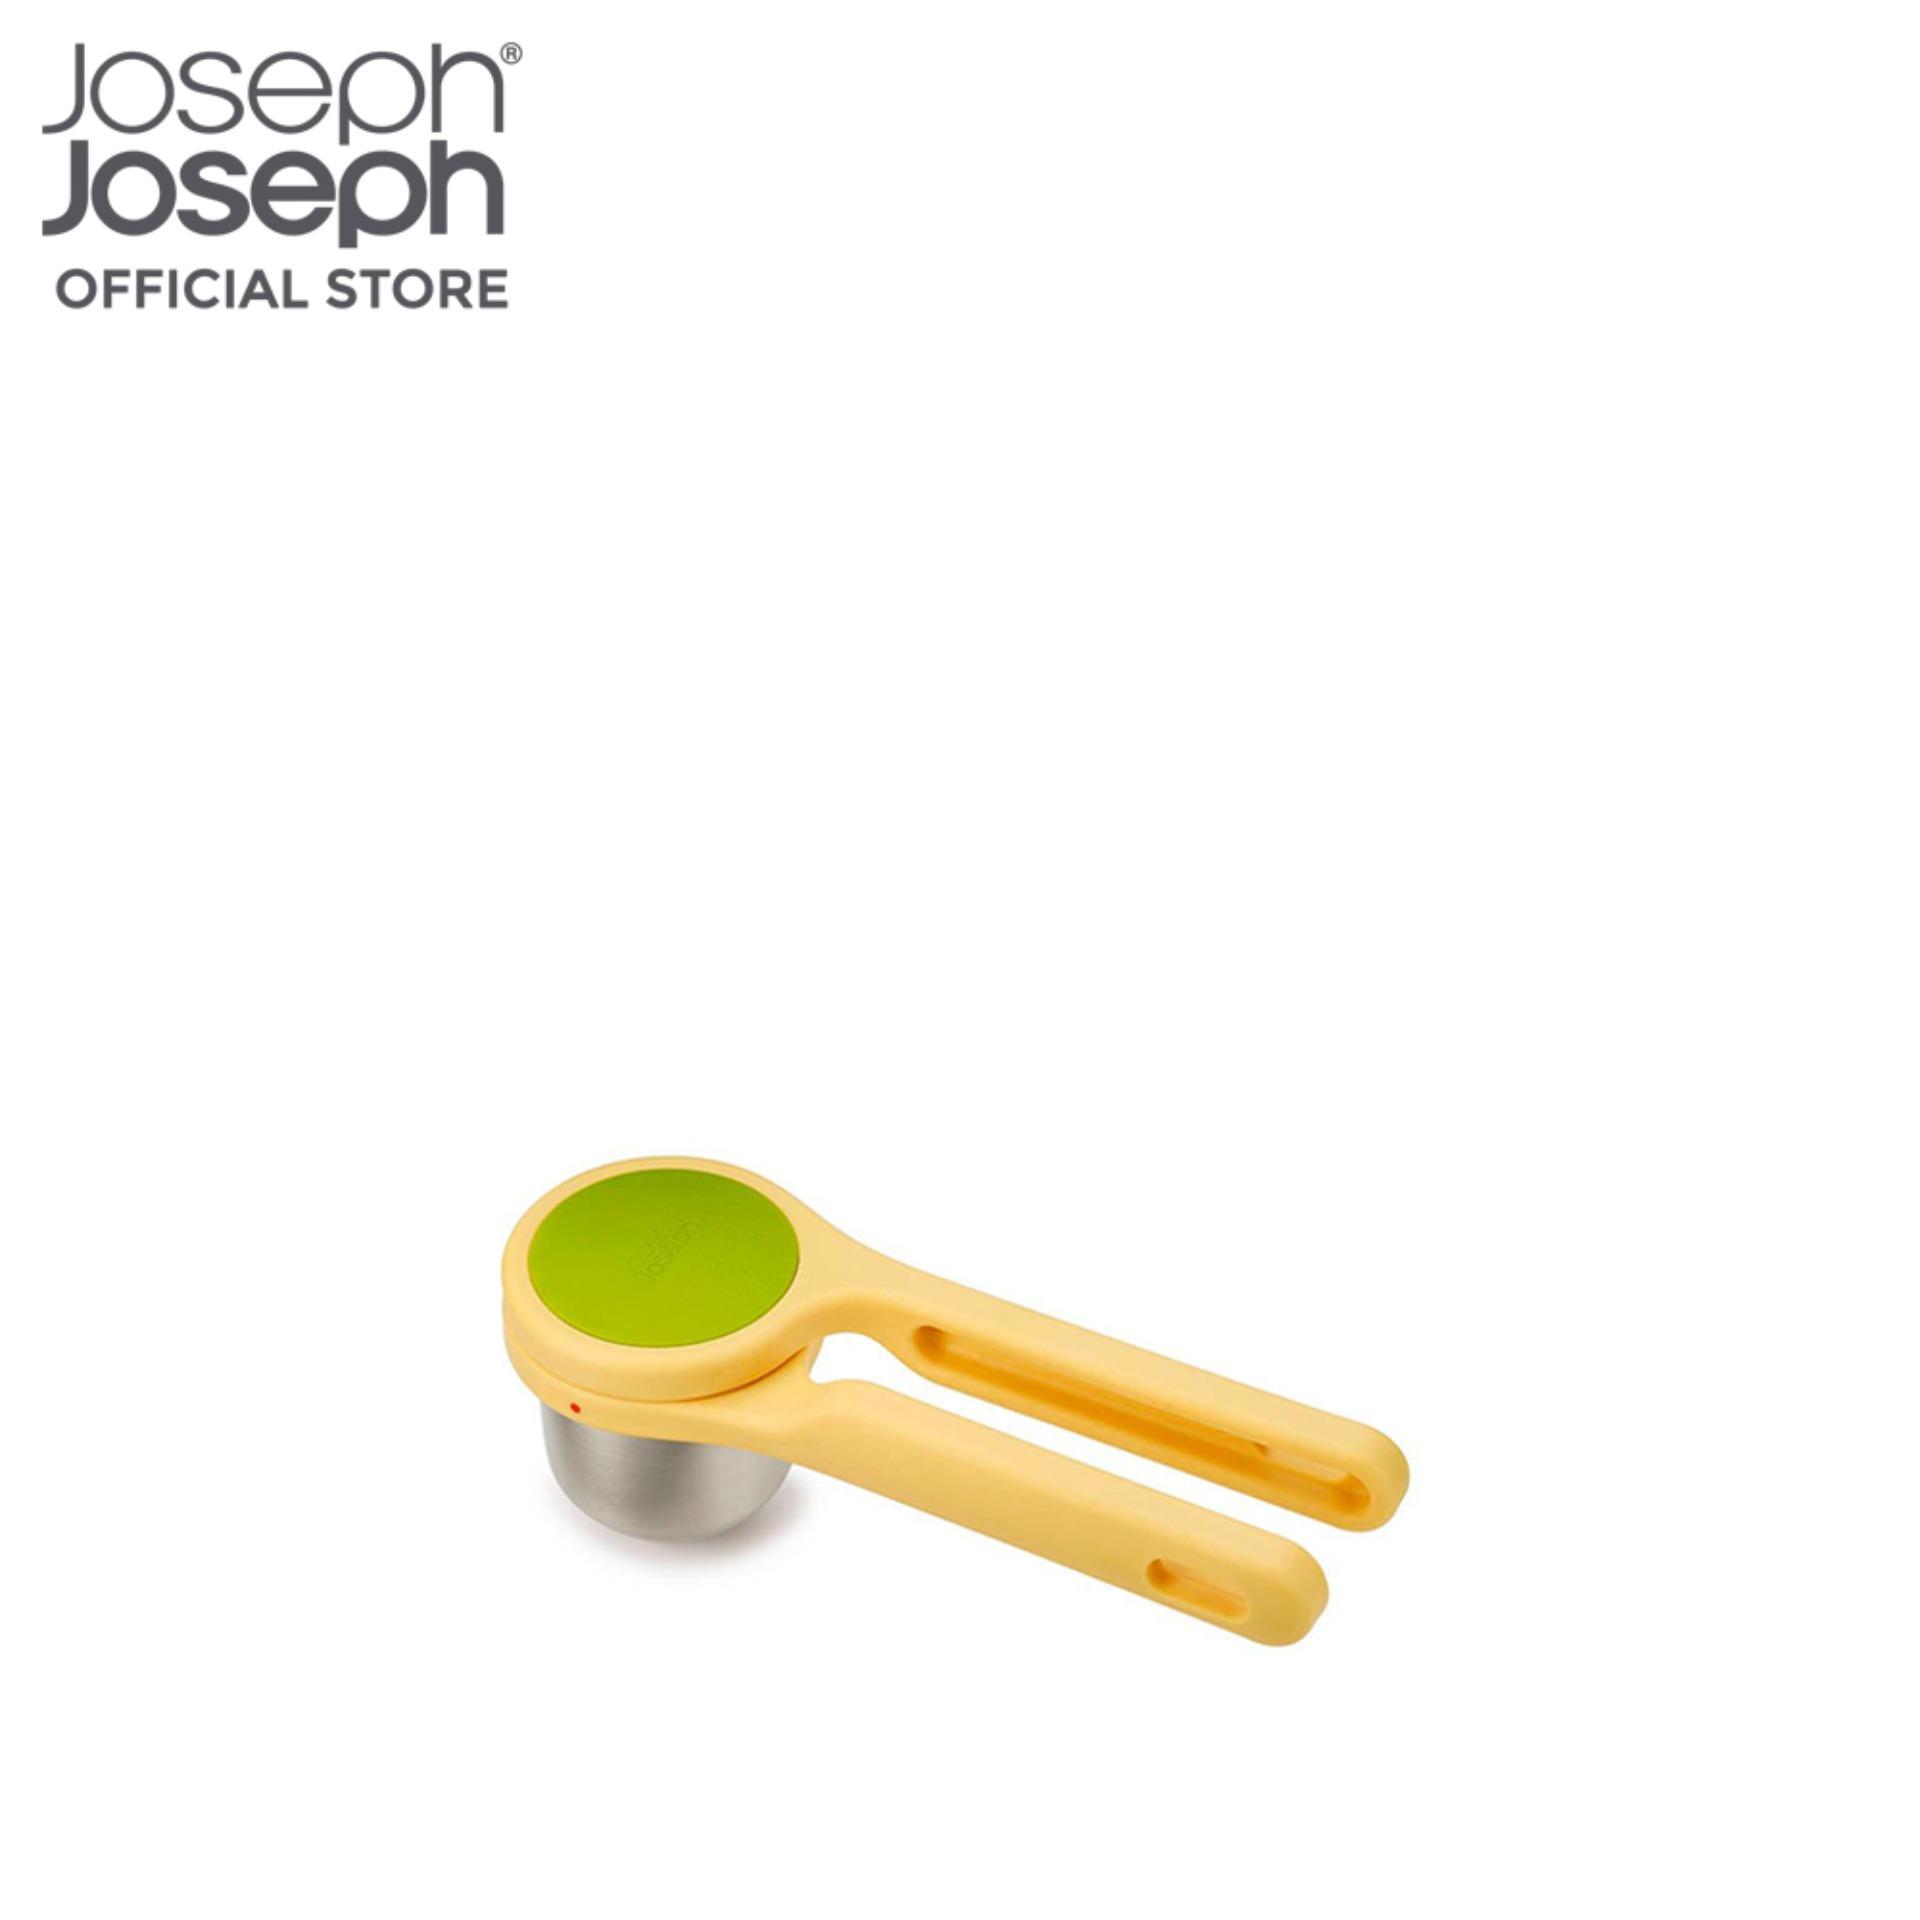 Joseph Joseph อุปกรณ์คั้นน้ำมะนาวหรือผลไม้ตระกูลส้ม รุ่น Helix สีเขียวเหลือง N20101